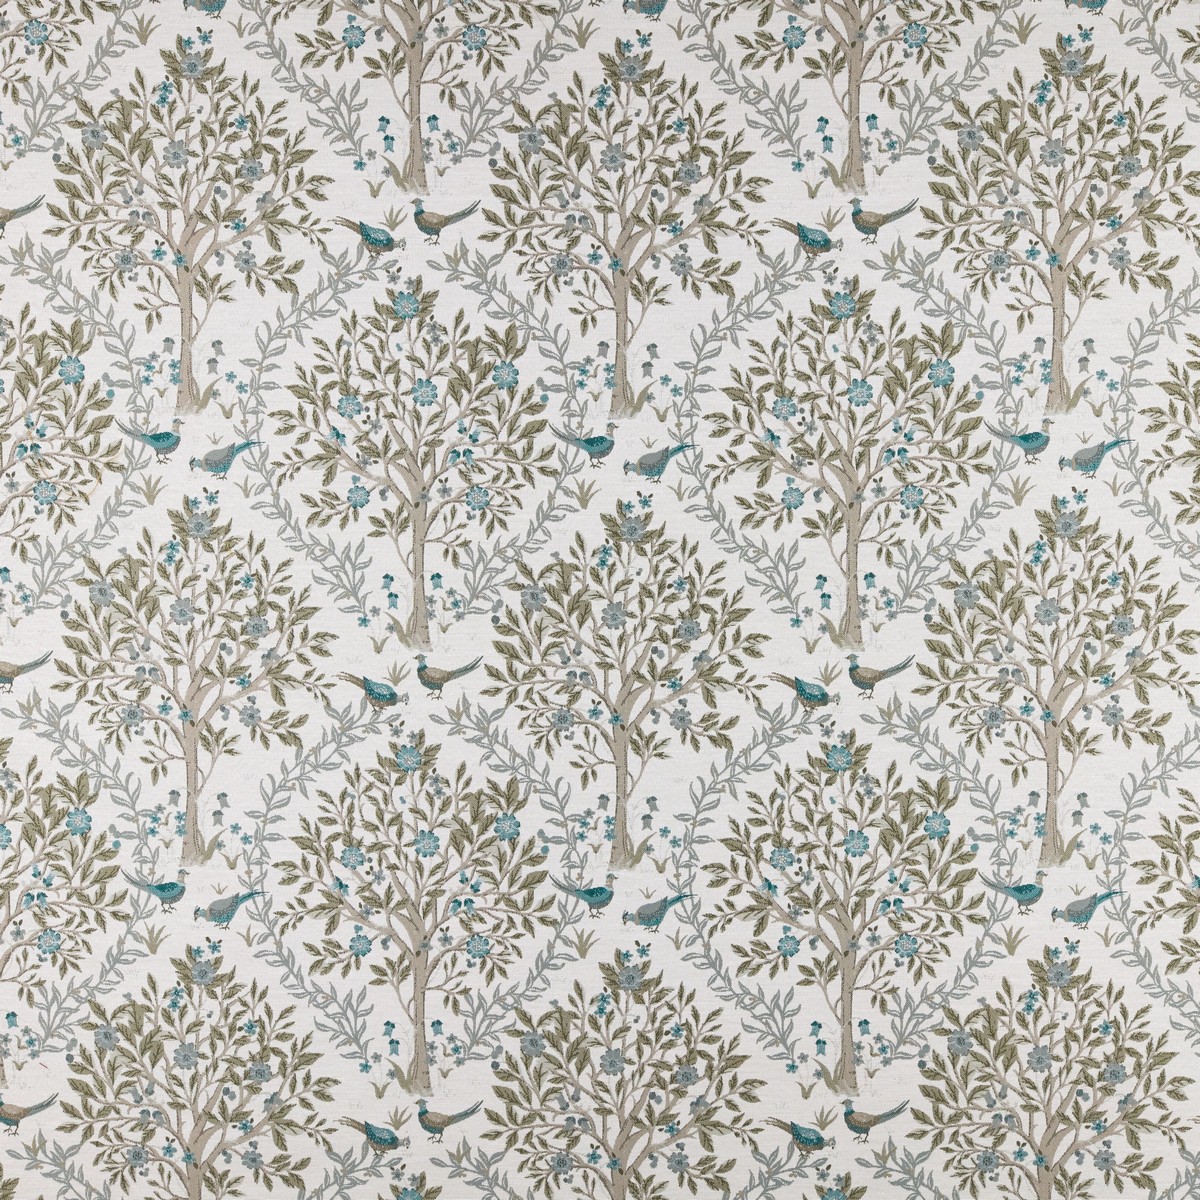 Bedgebury Kingfisher Fabric by Ashley Wilde